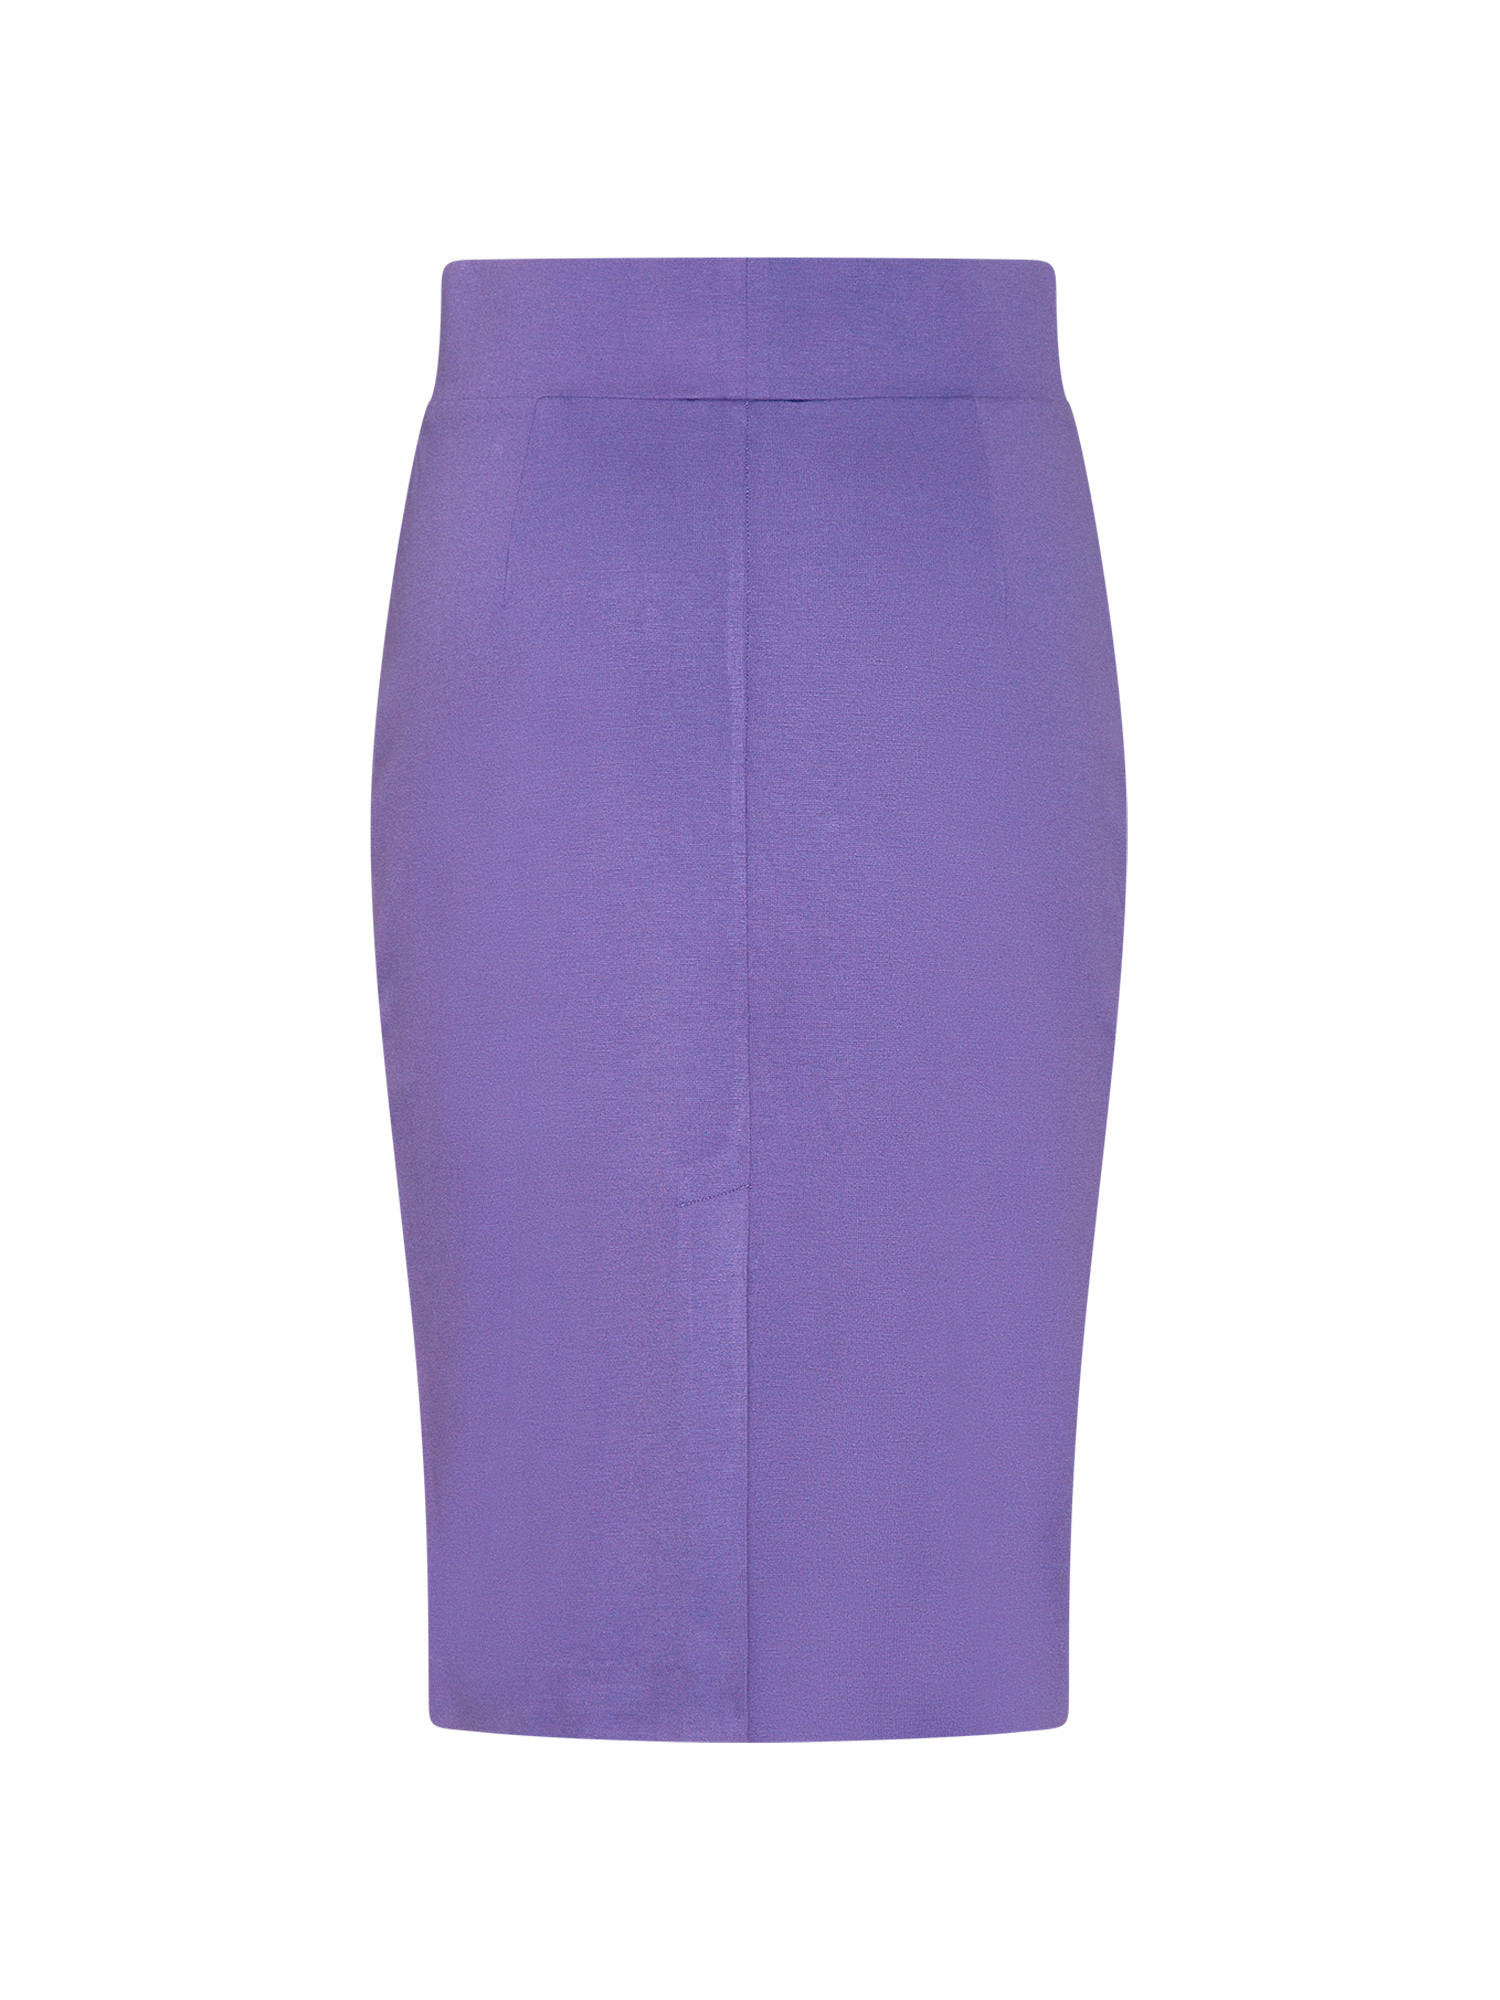 Koan - Milano stitch skirt, Purple, large image number 1